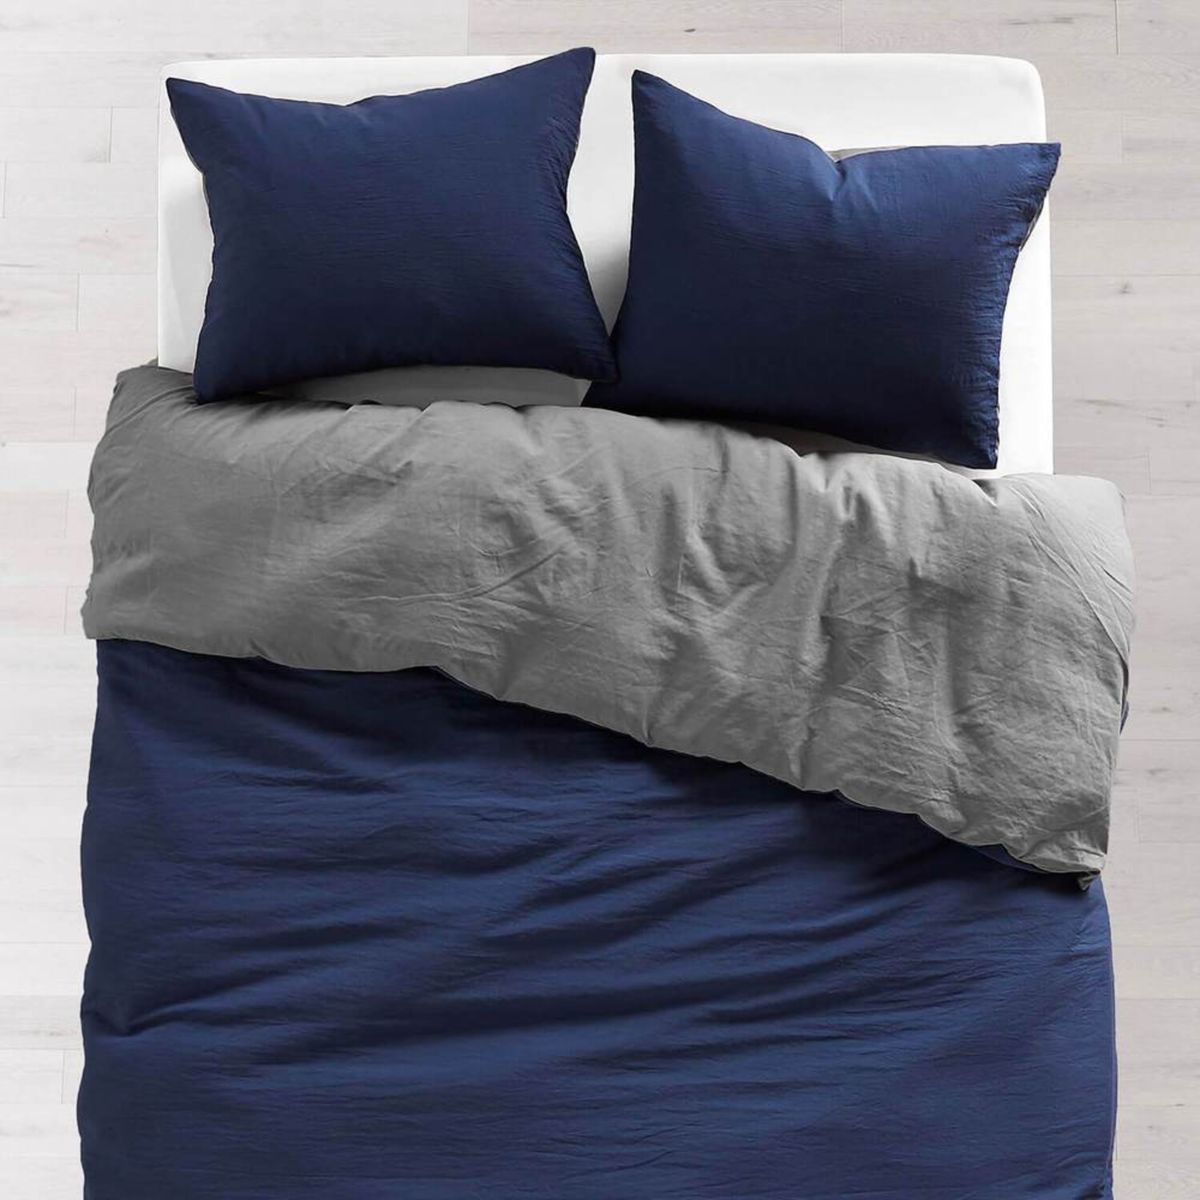 Bedding Duvet Set - 3 Piece Comforter Set - Reversible - Blue